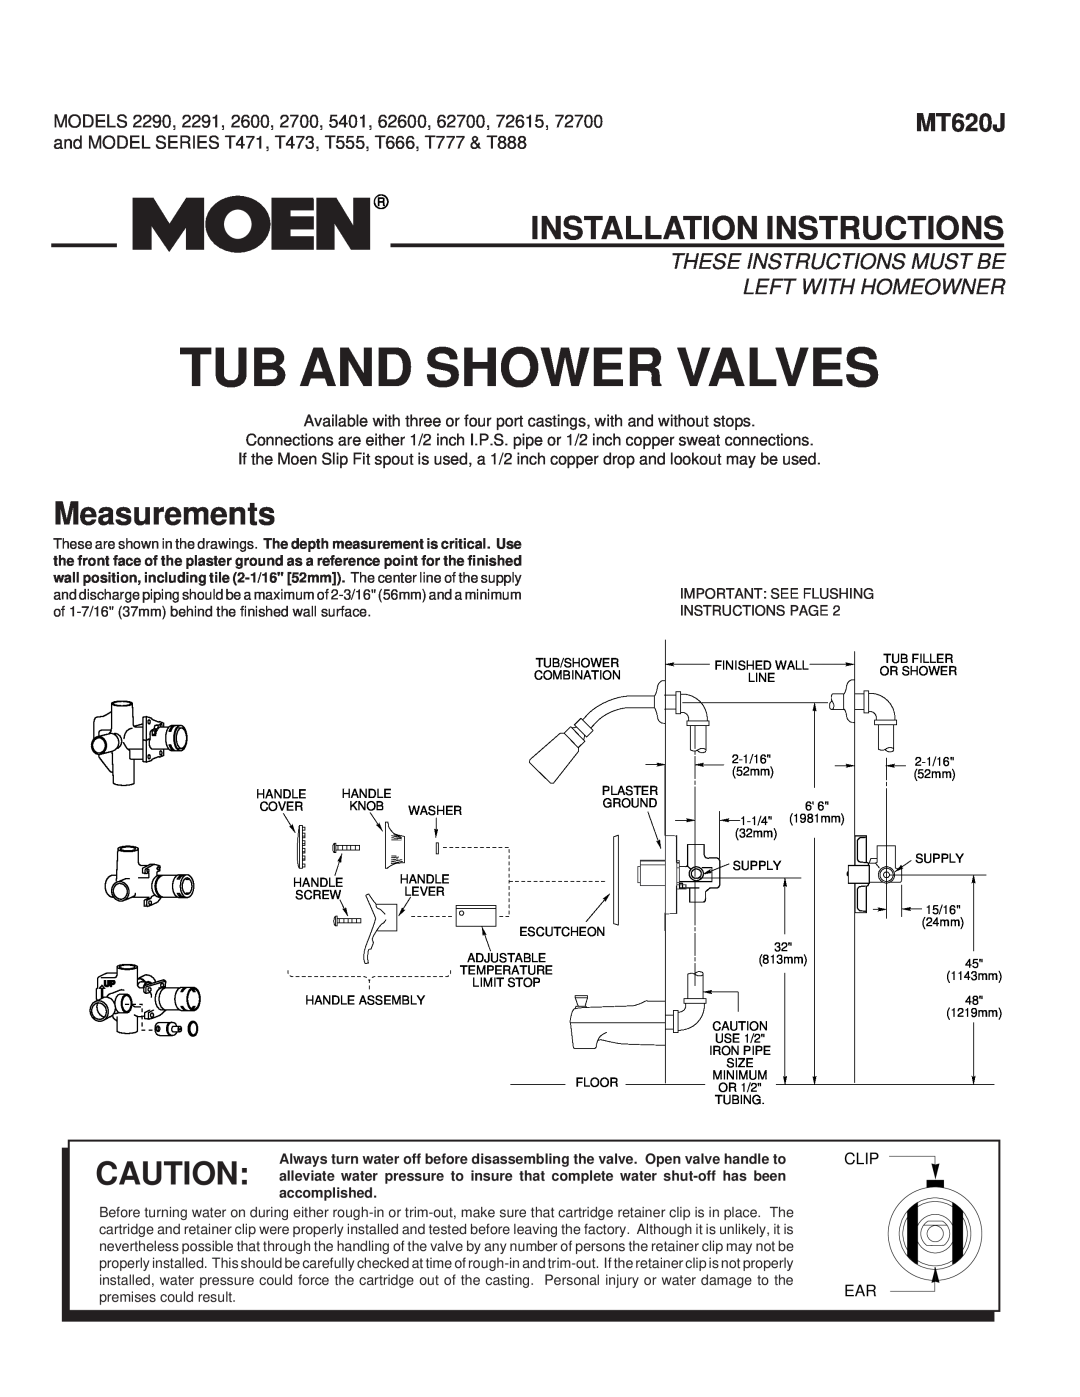 Moen T555, T471, T473, T666 installation instructions Installation Instructions, Measurements, MT620J, Tub And Shower Valves 